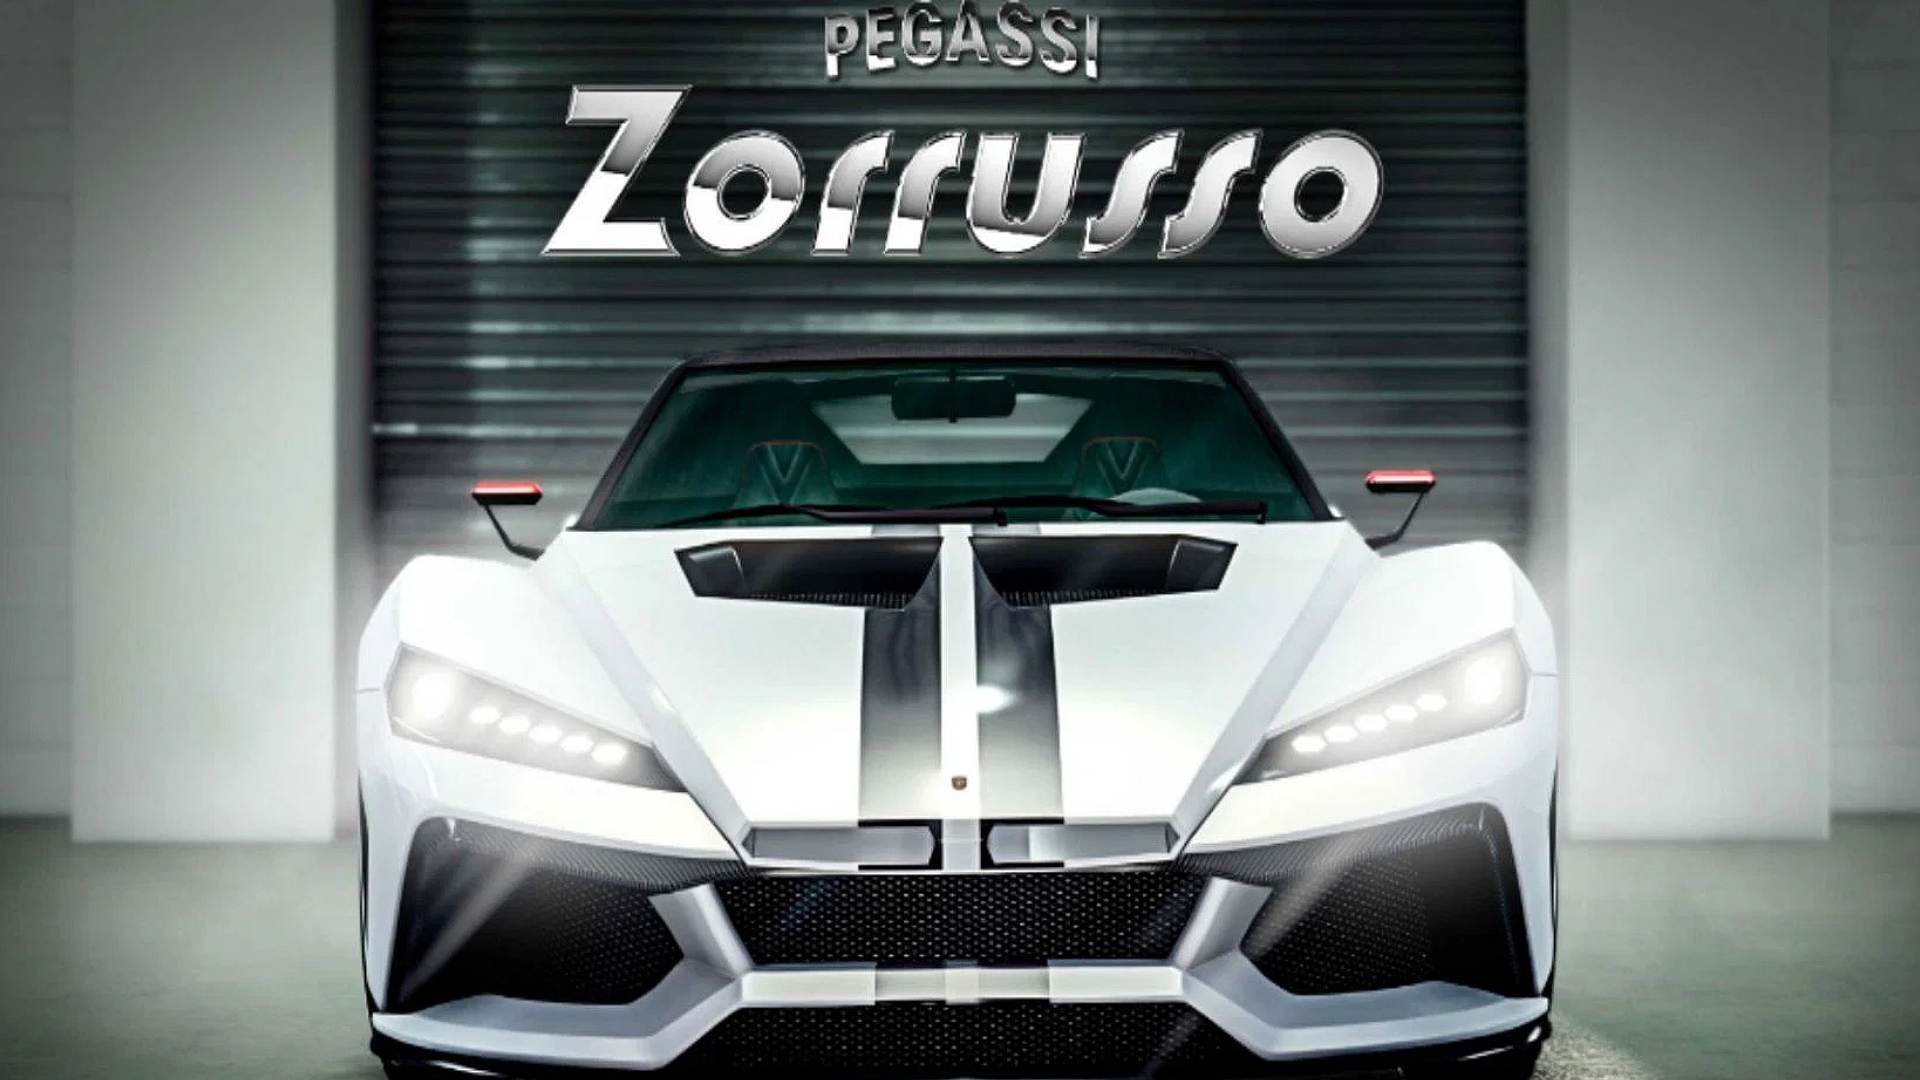 Pegassi Zorrusso GTA Online